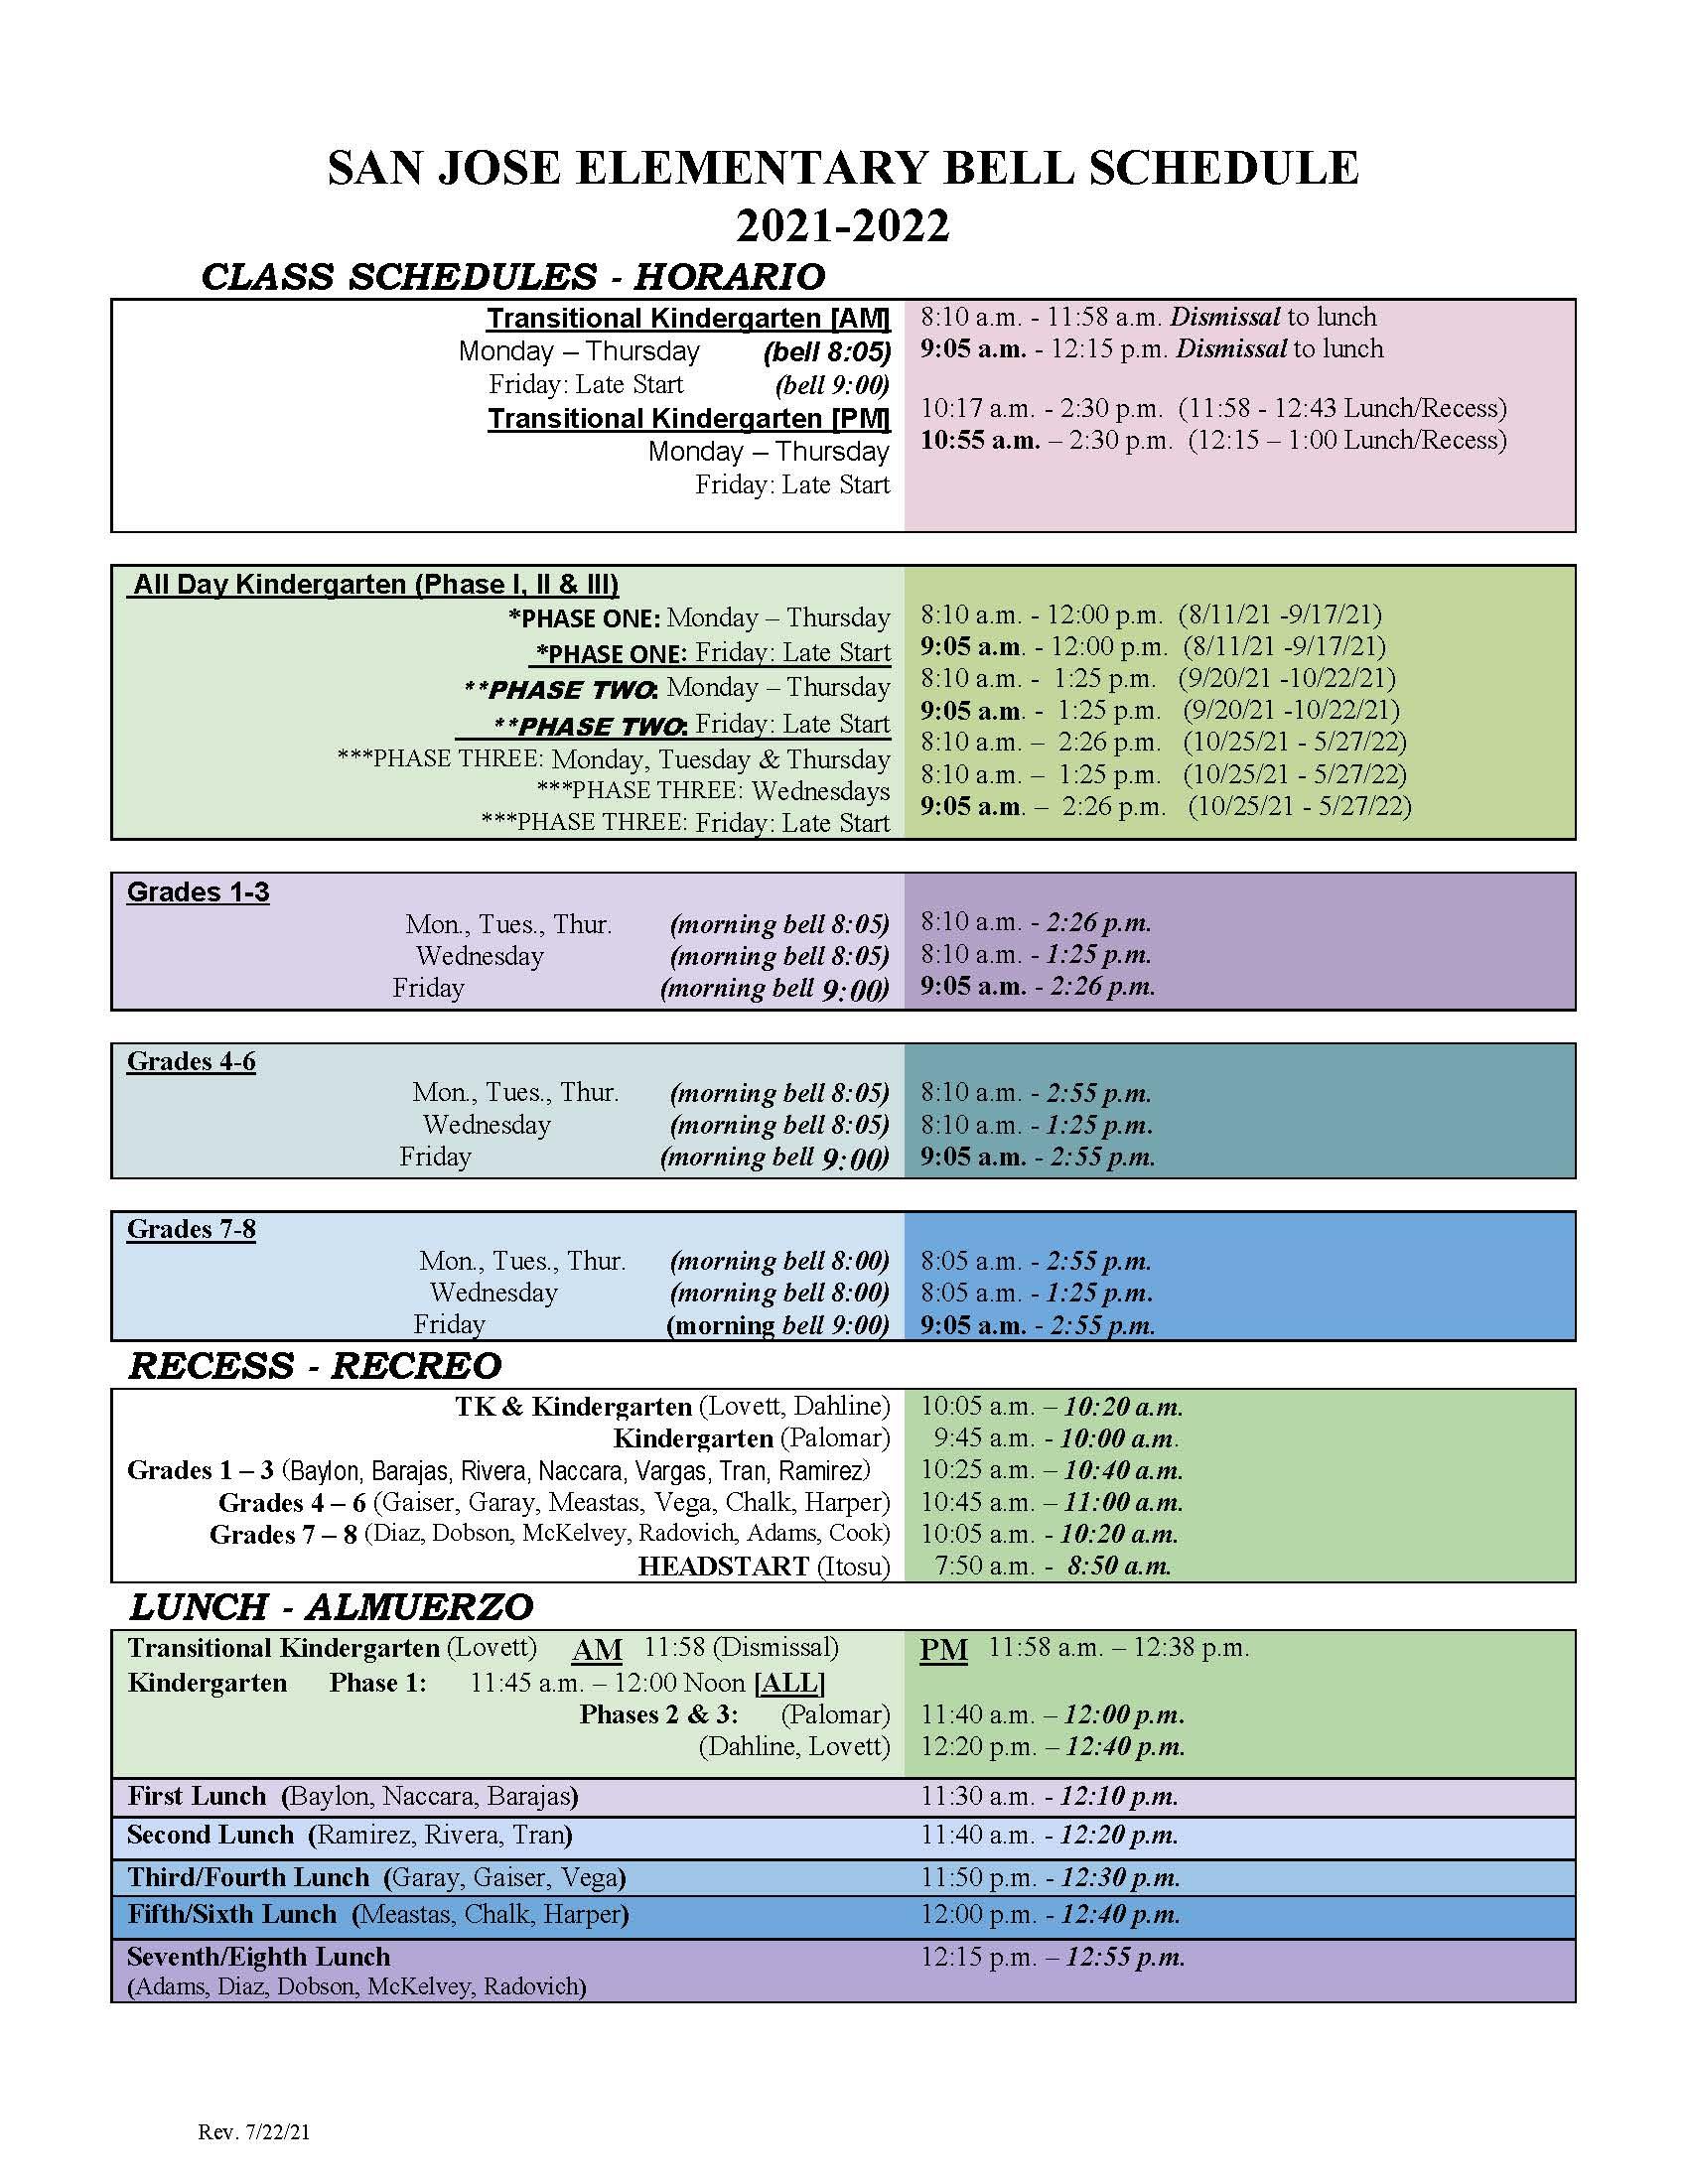 San Jose Bell Schedule